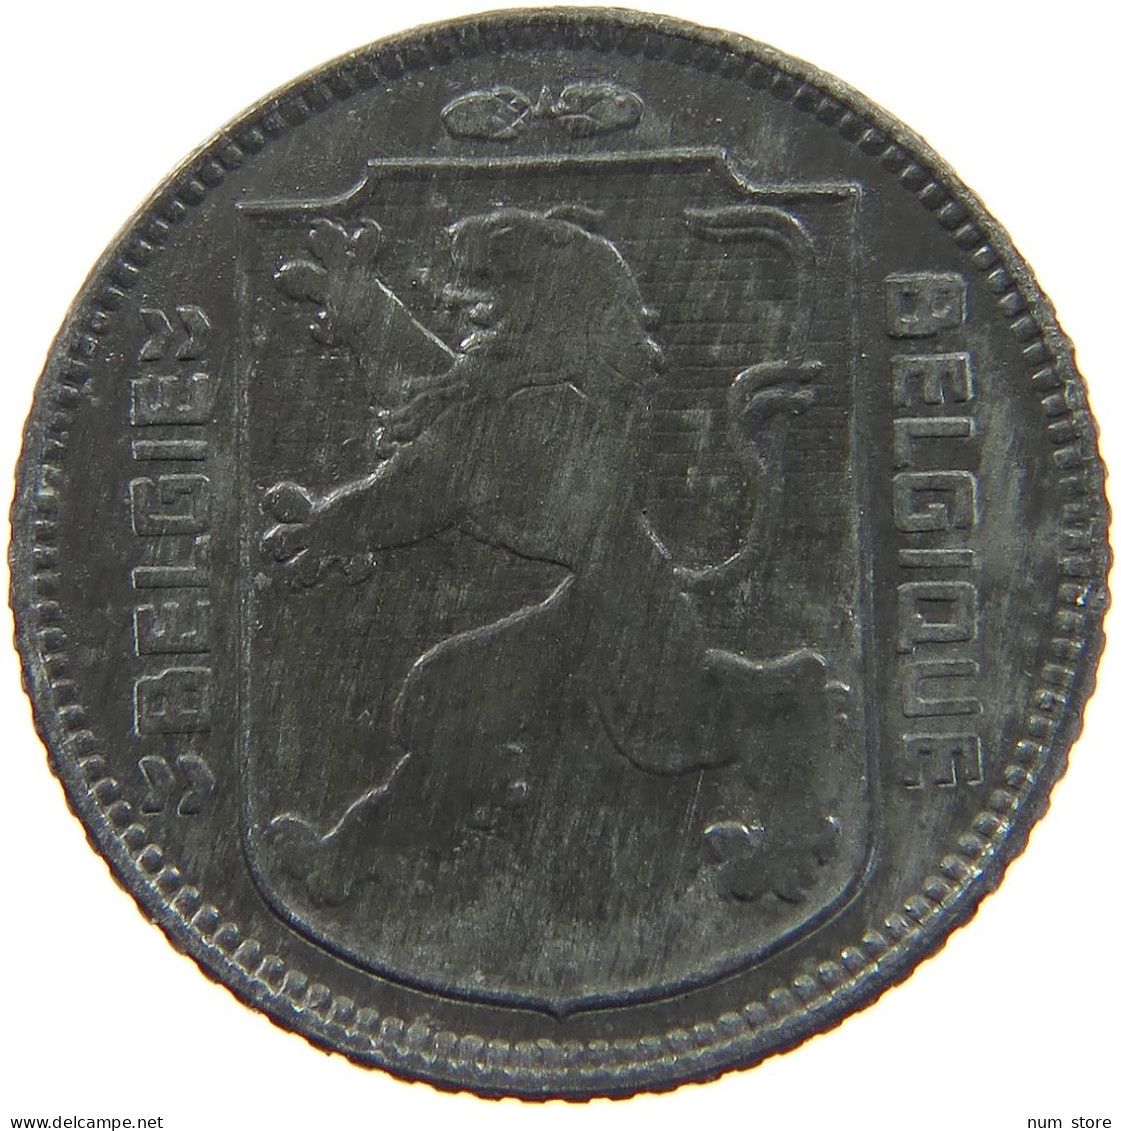 BELGIUM 1 FRANC 1945 #c020 0443 - 1 Franc